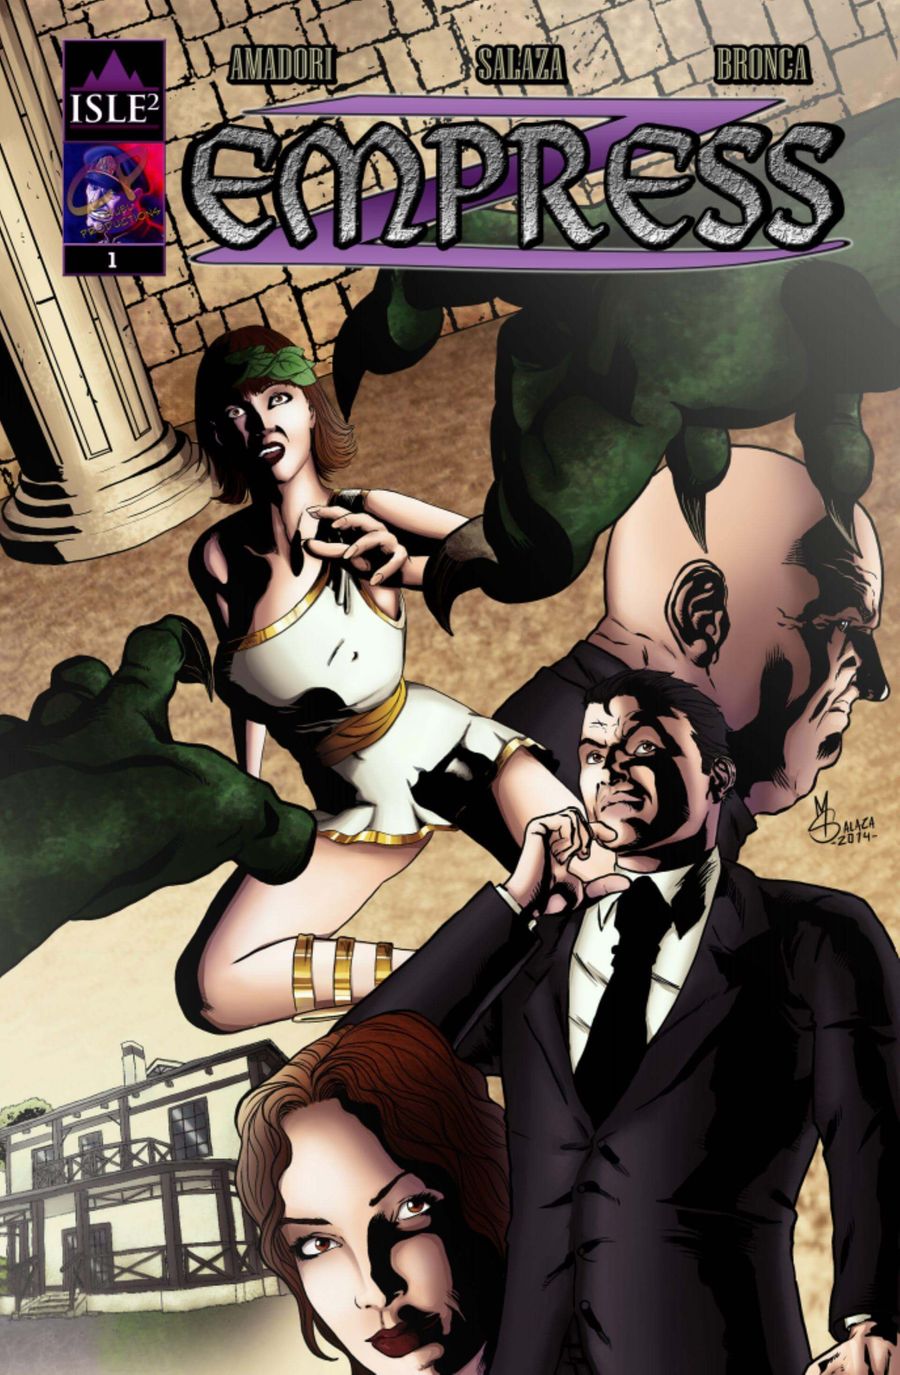 Isle Squared Comics | Empress #1 page 1 | Spinwhiz Comics